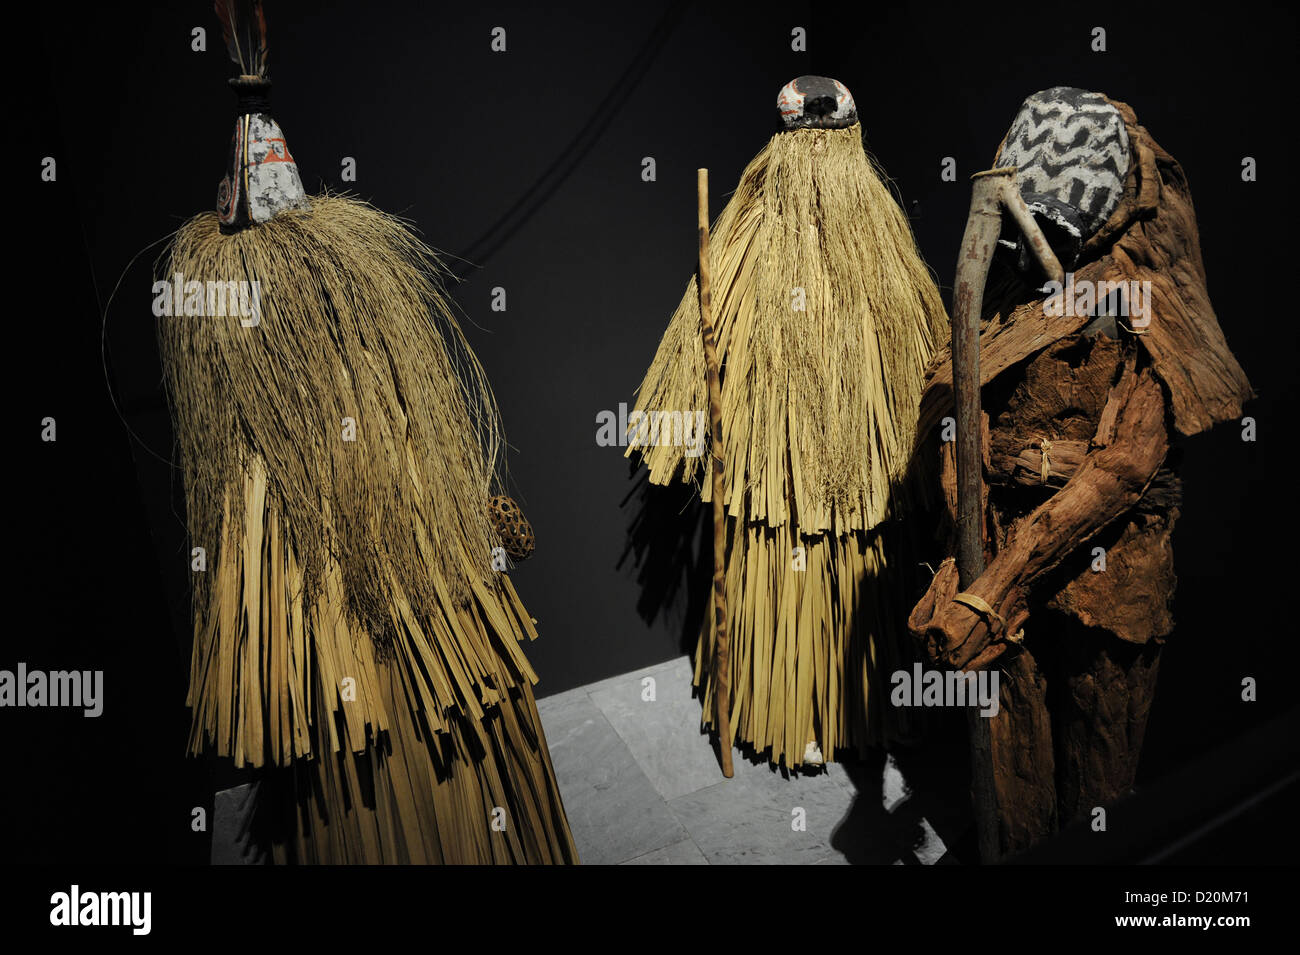 Piaroa's ceremonial masks. Venezuela. Ethnographic Museum. Budapest. Hungary. Stock Photo